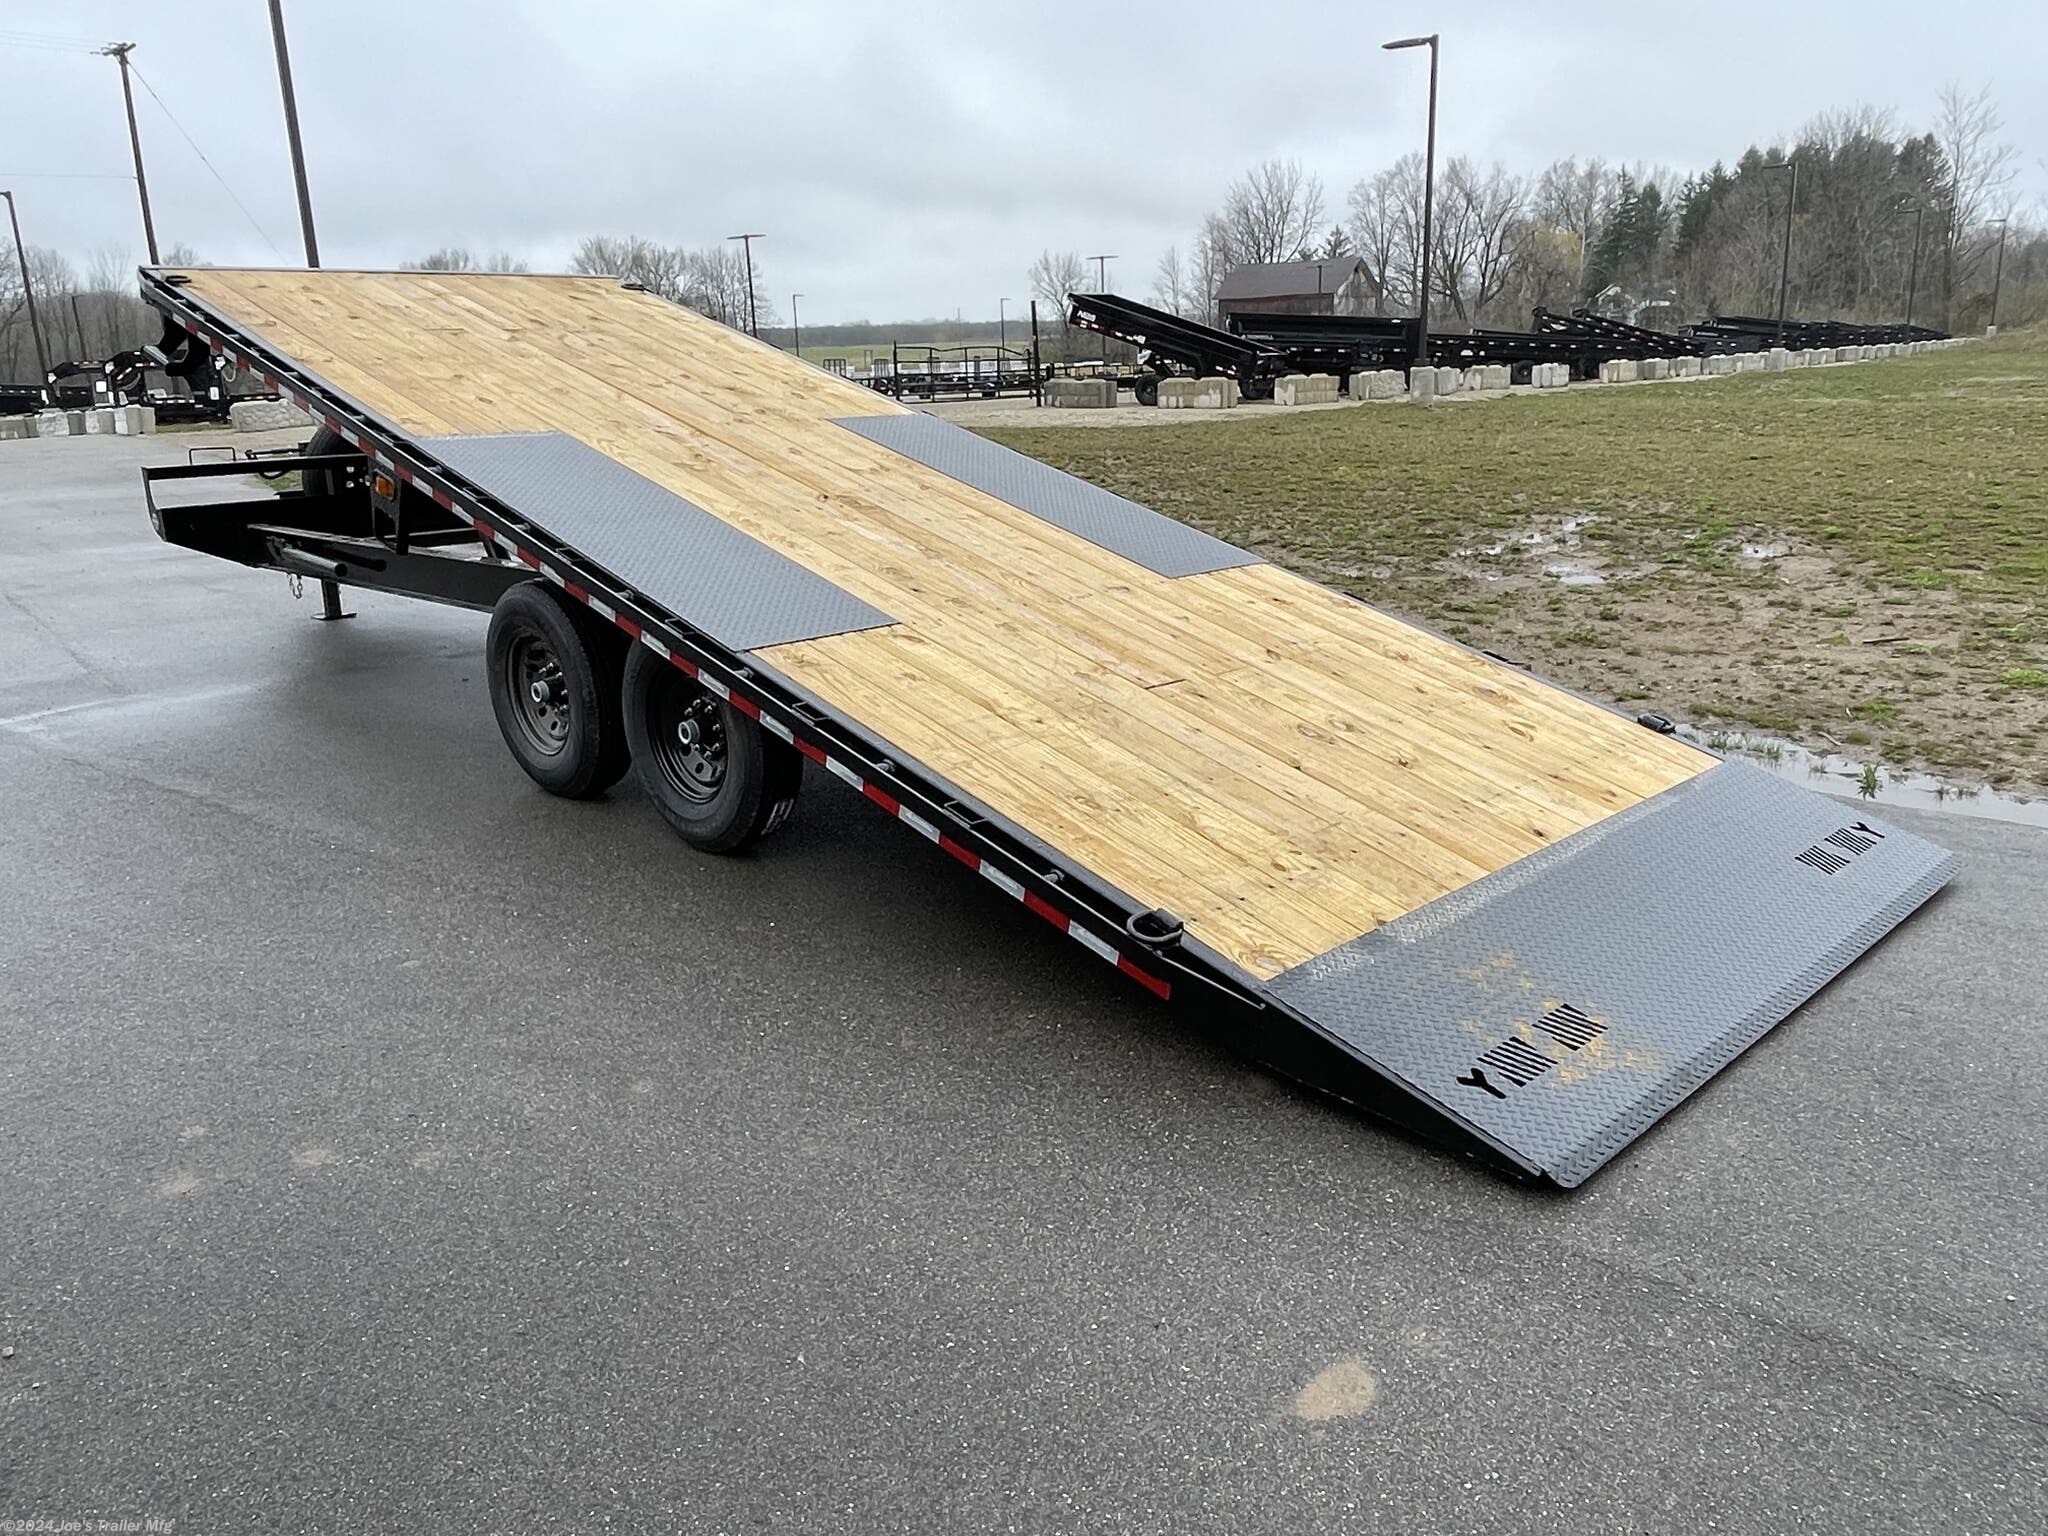 Deck over trailer